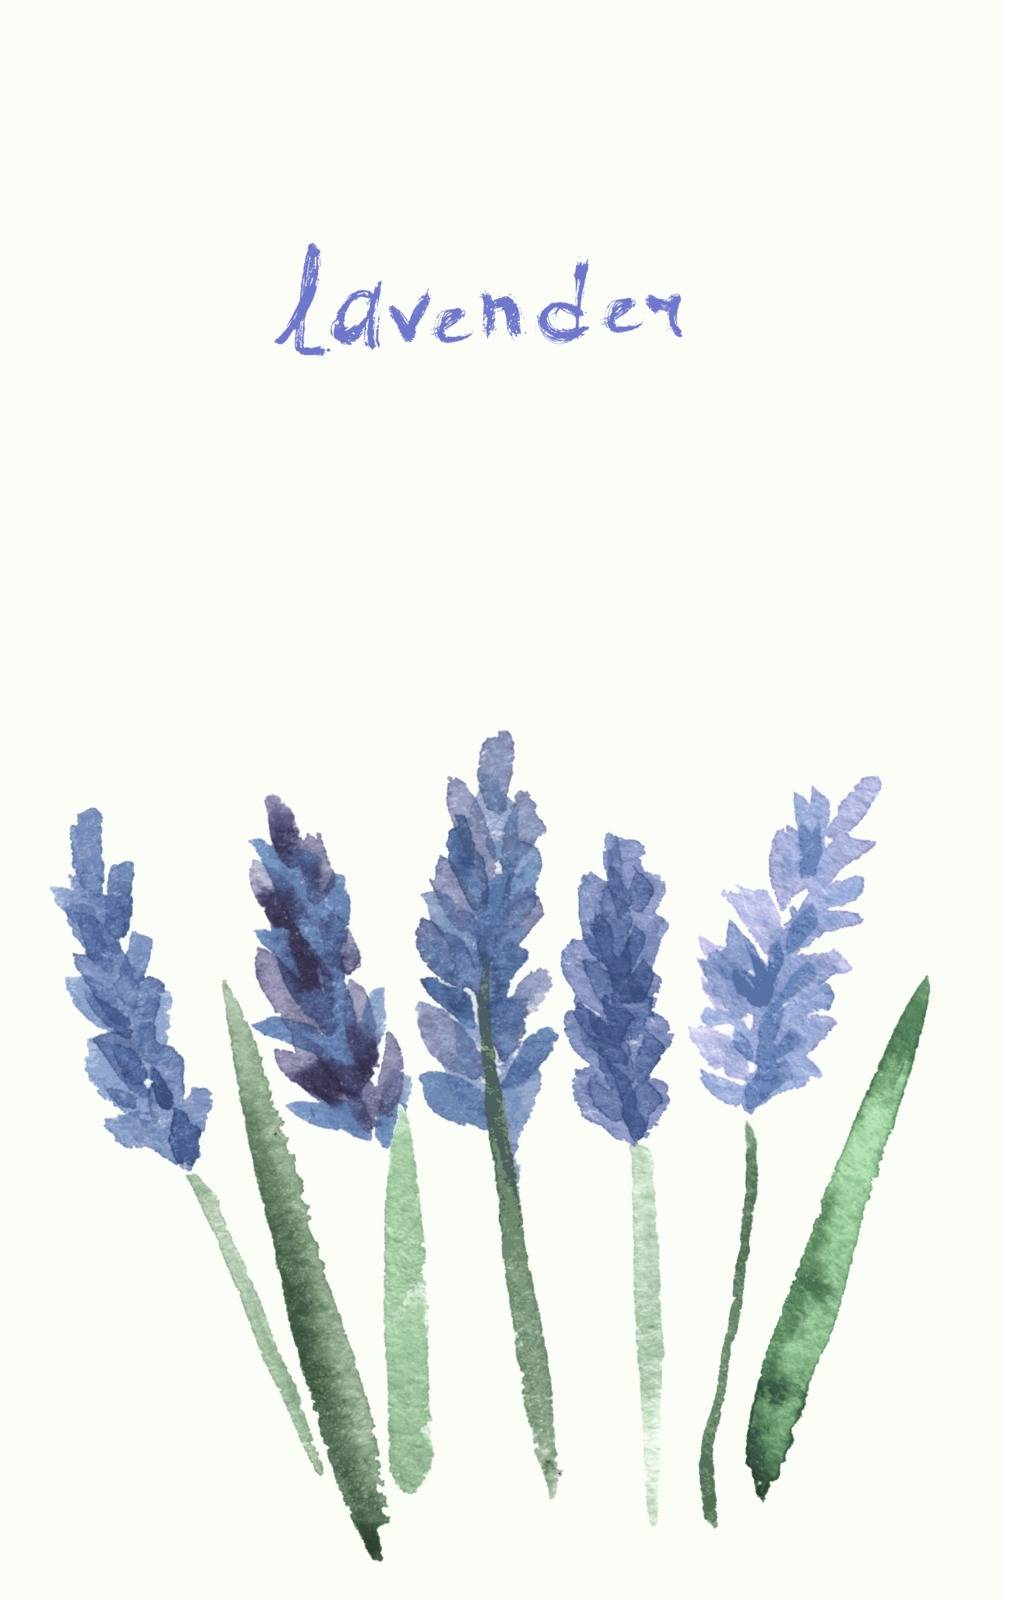 Vector watercolor lavender with blue bright watercolor ribbon.